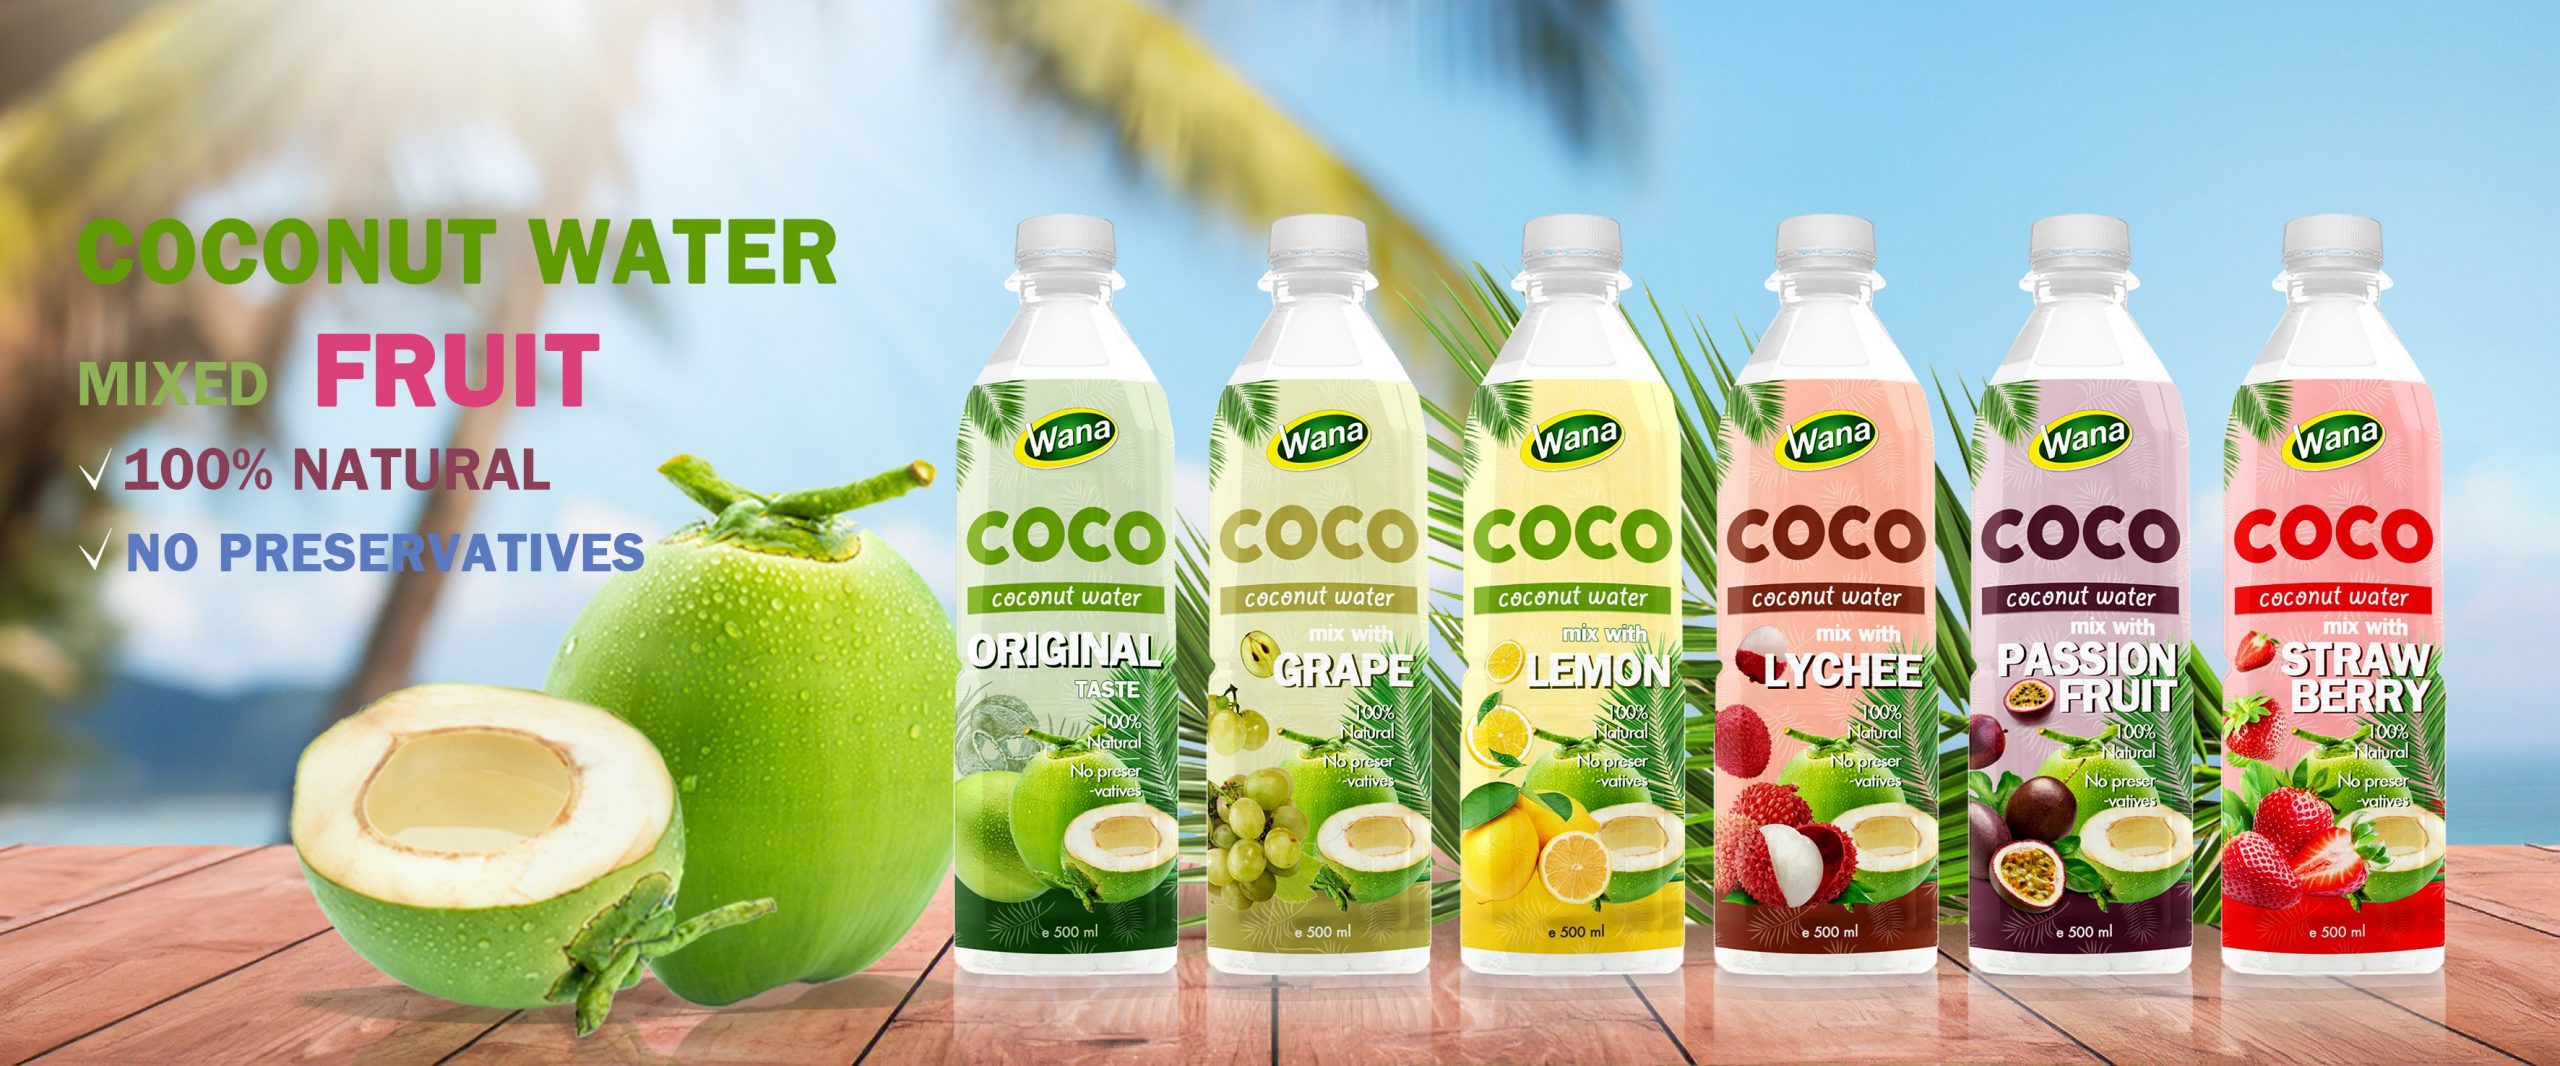 Coconut water manufacturer